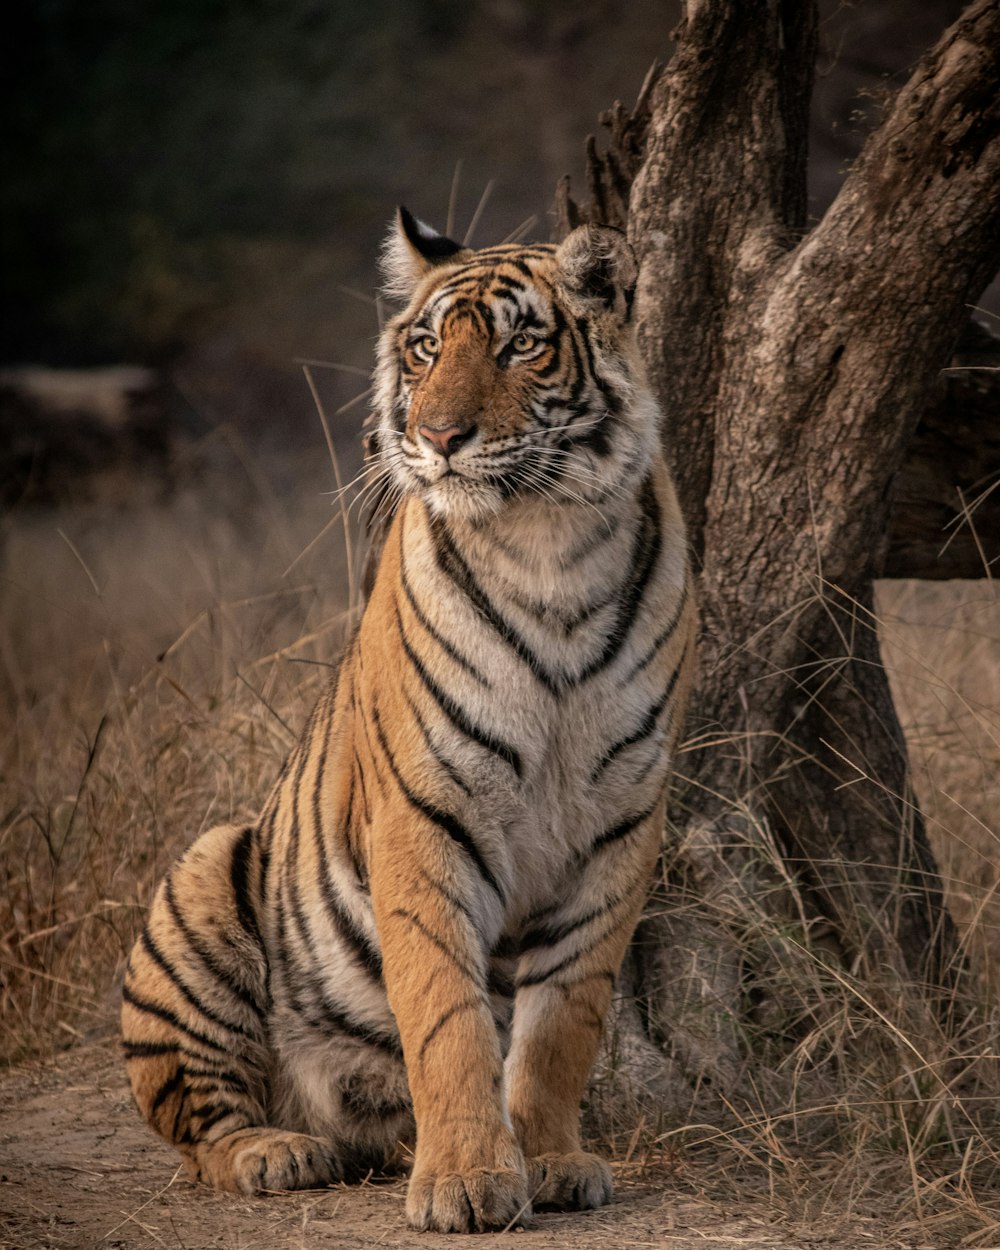 tiger on brown grass during daytime